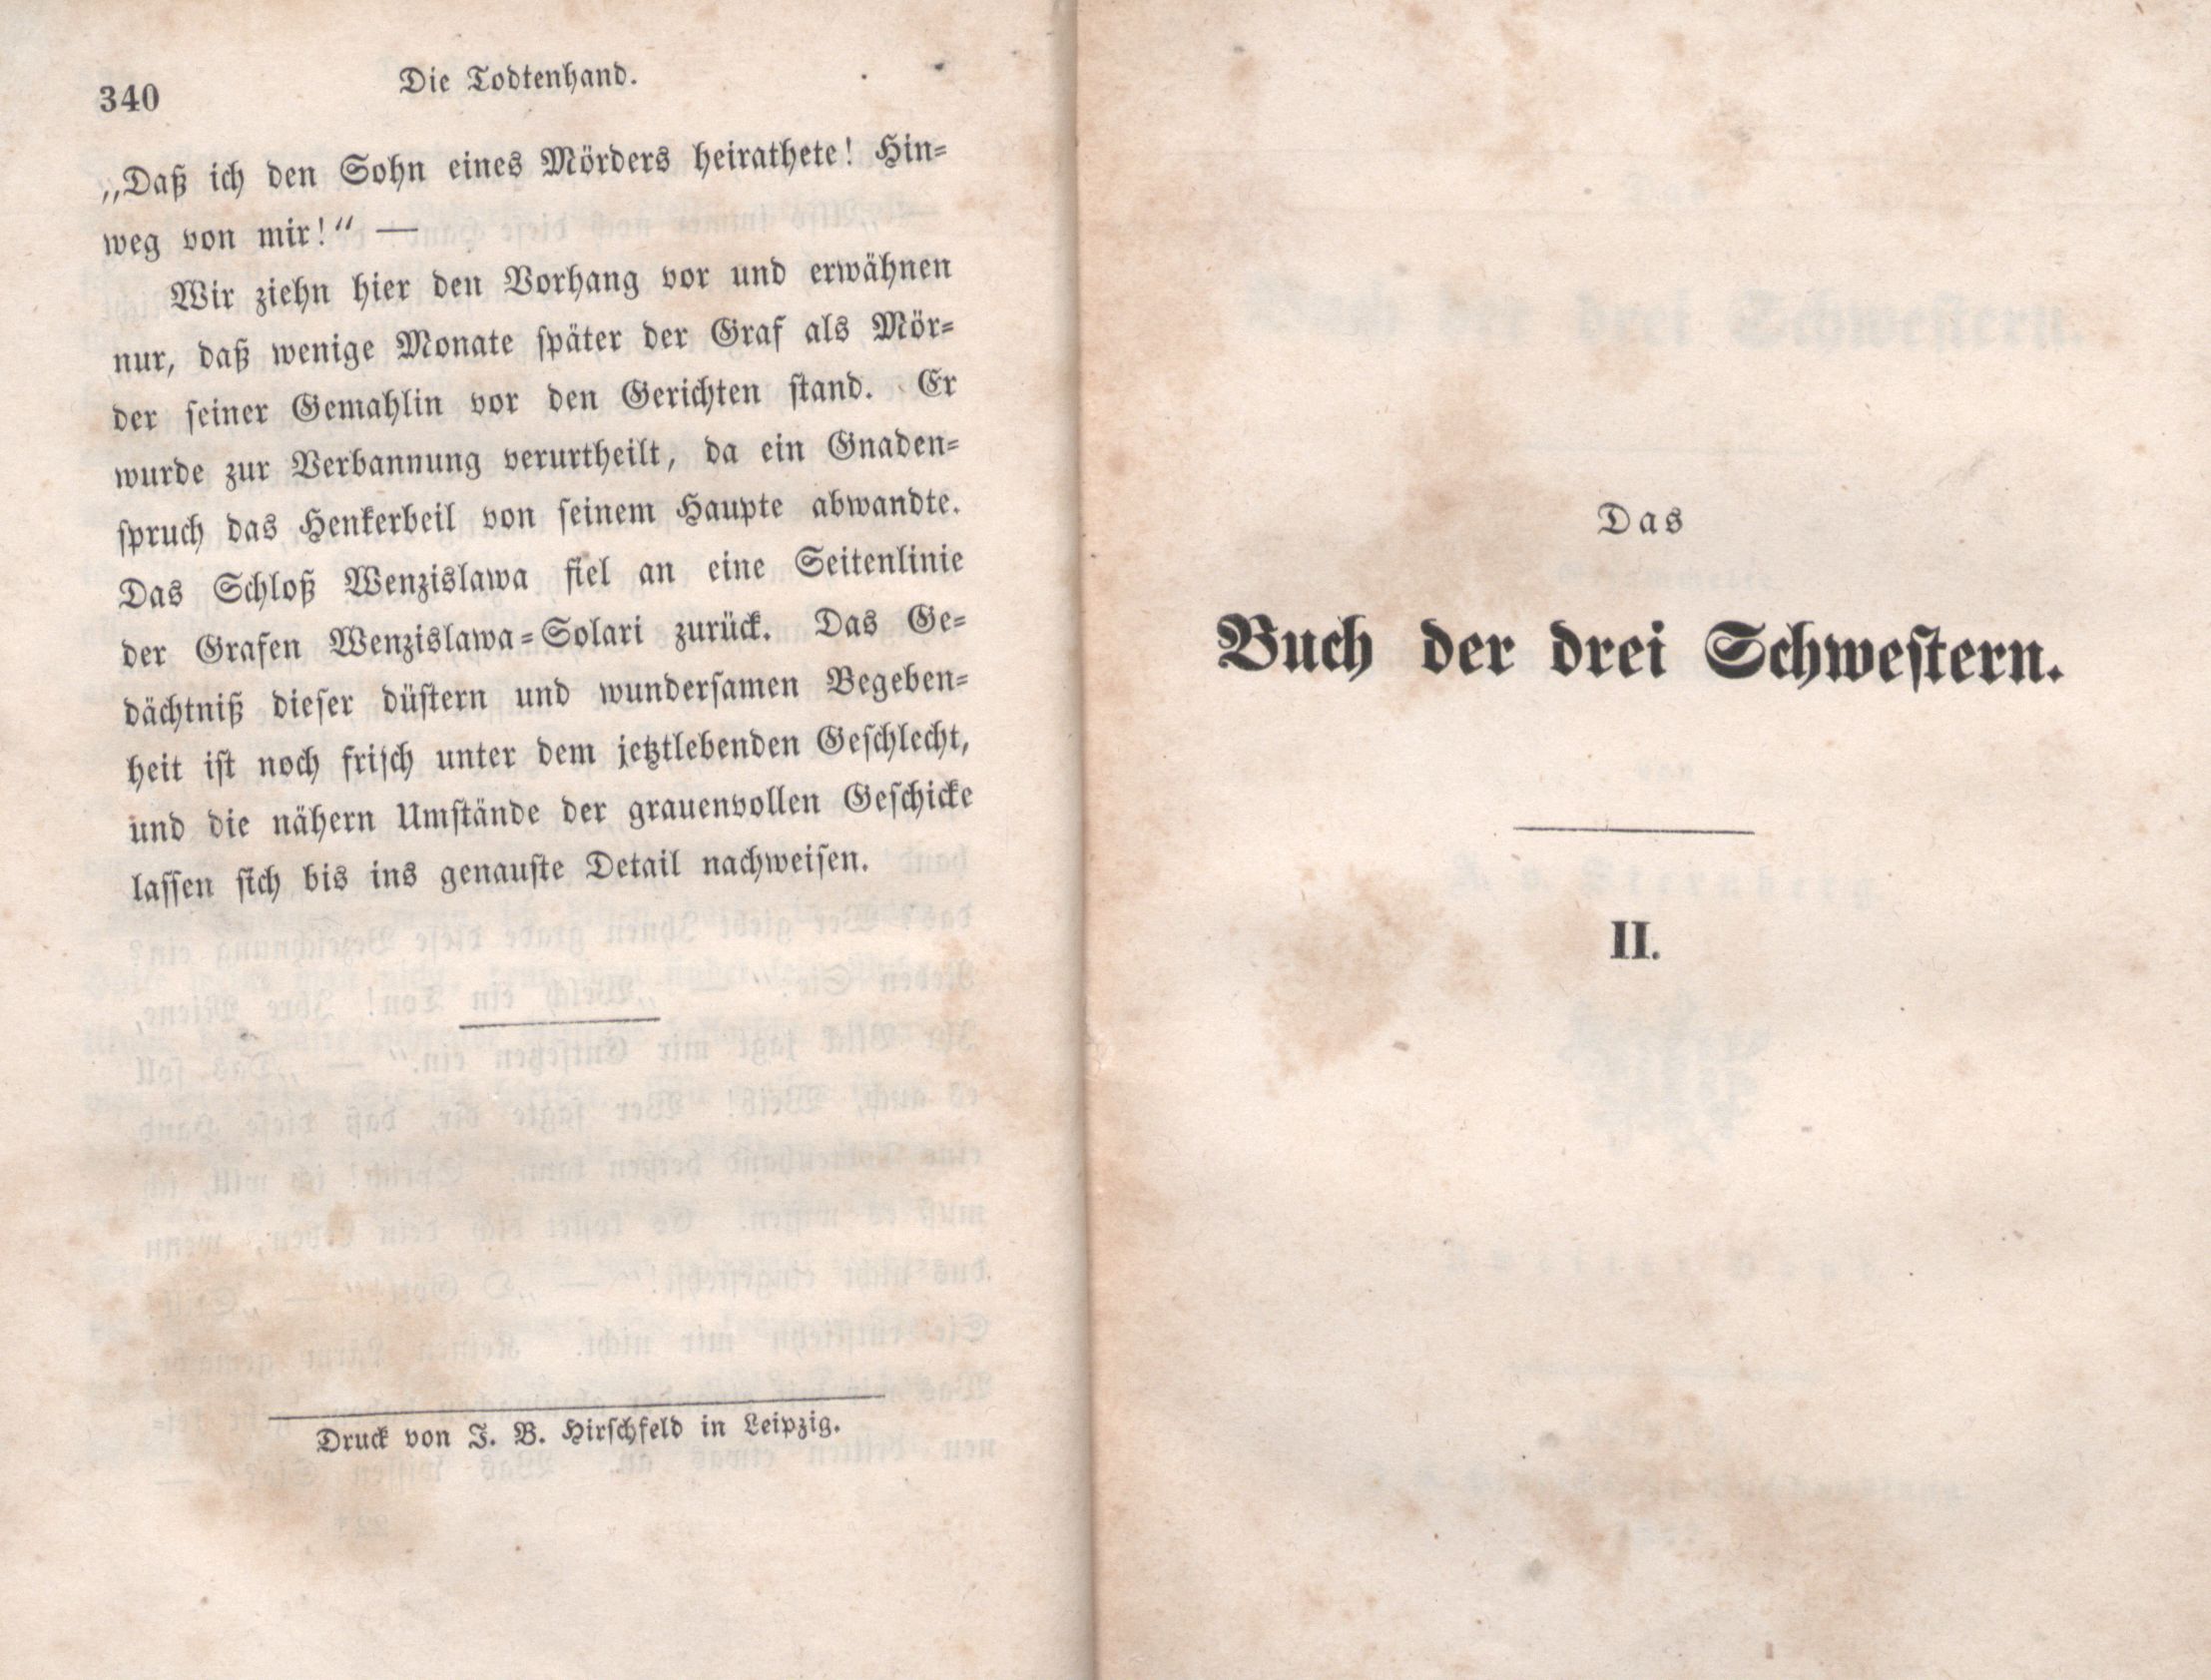 Die Todtenhand (1847) | 24. (340) Main body of text